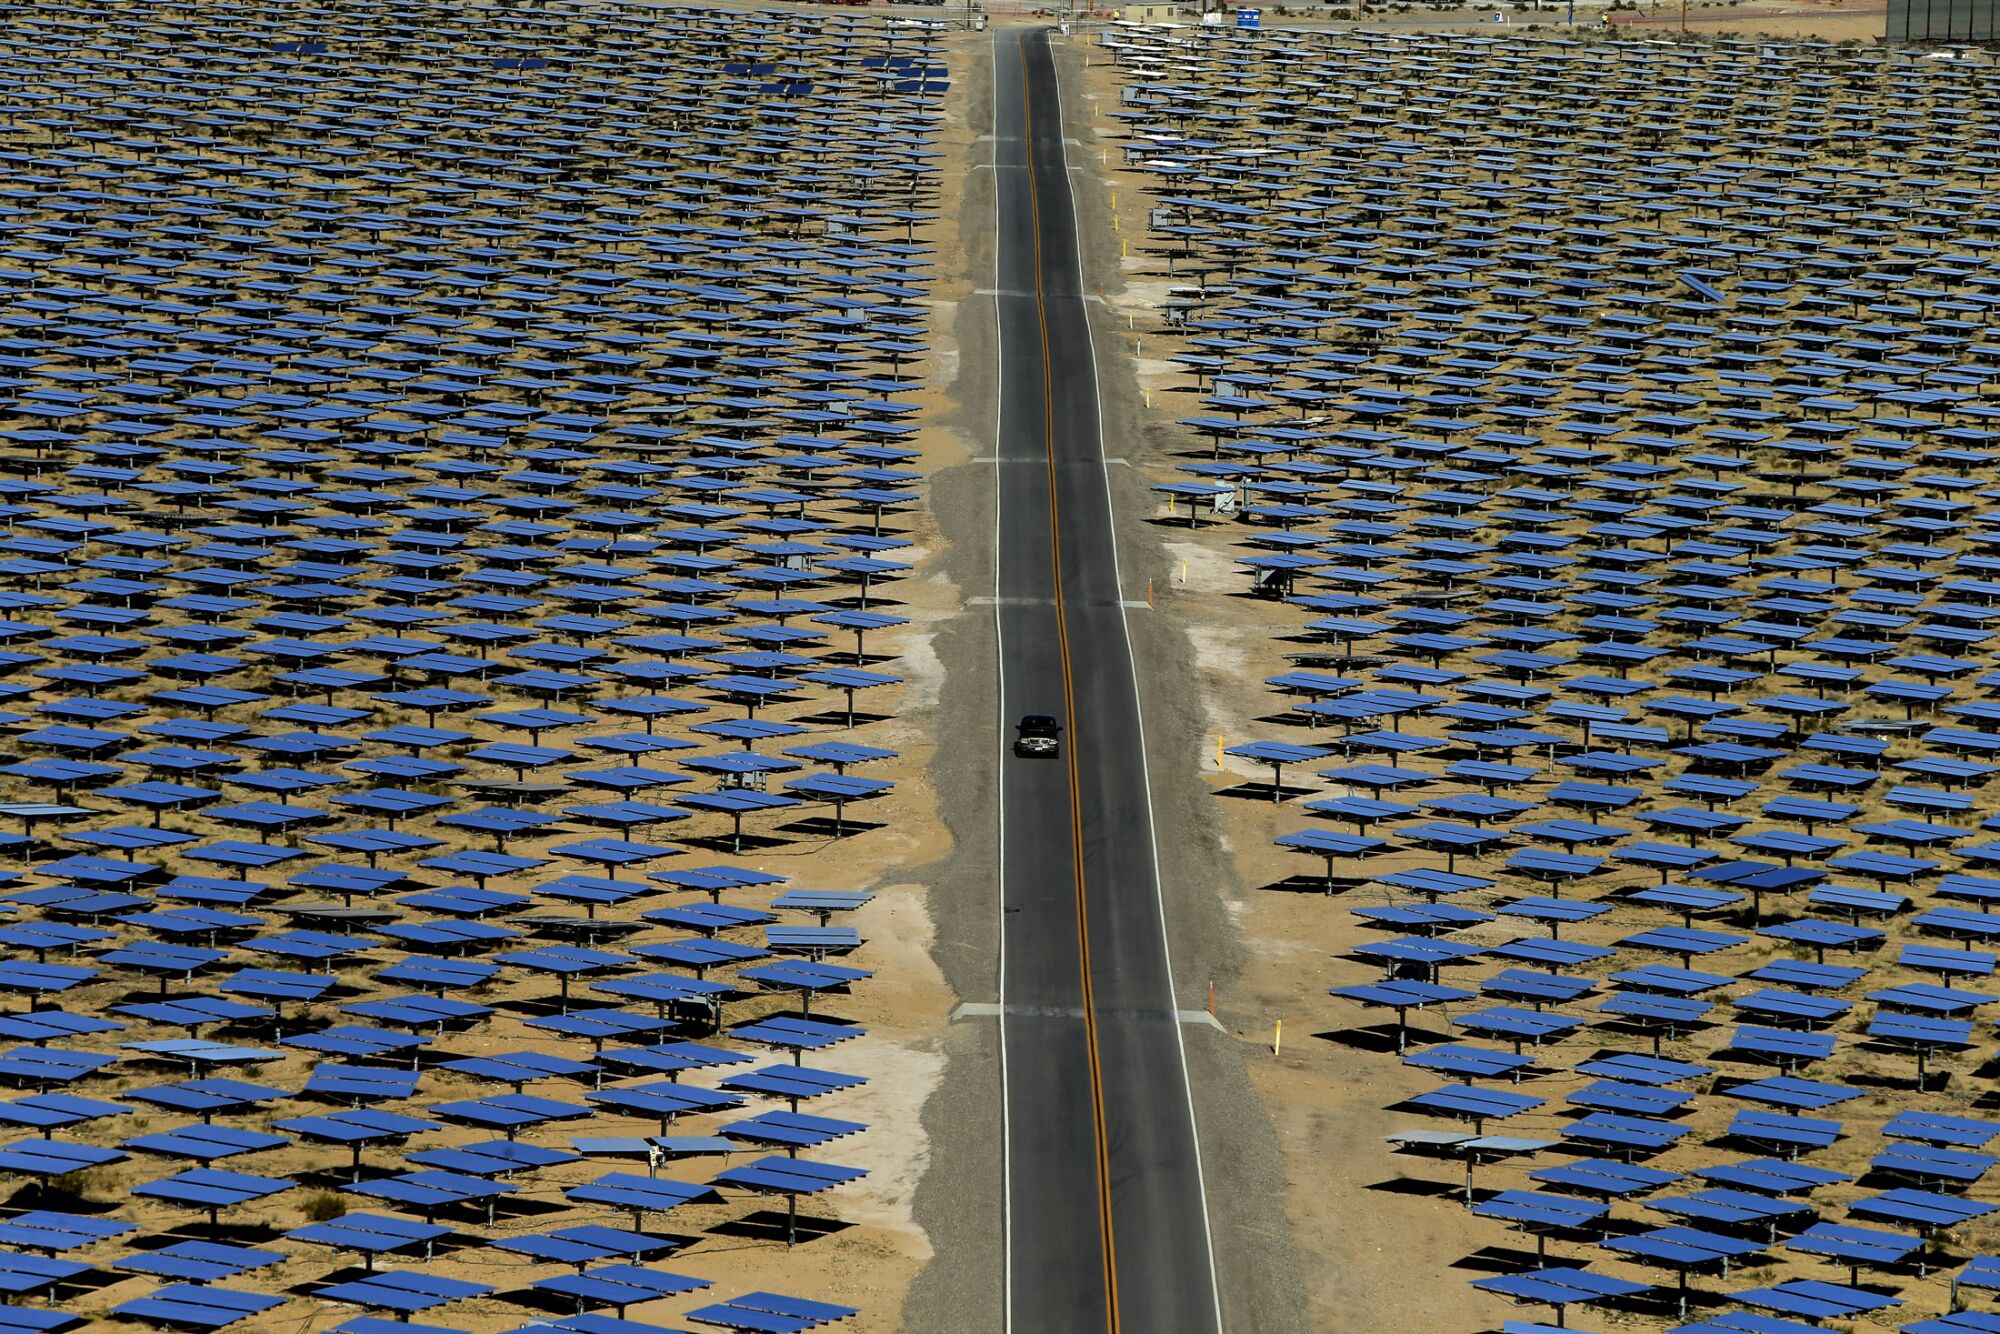 A desert road cuts through a vast array of solar energy mirrors.